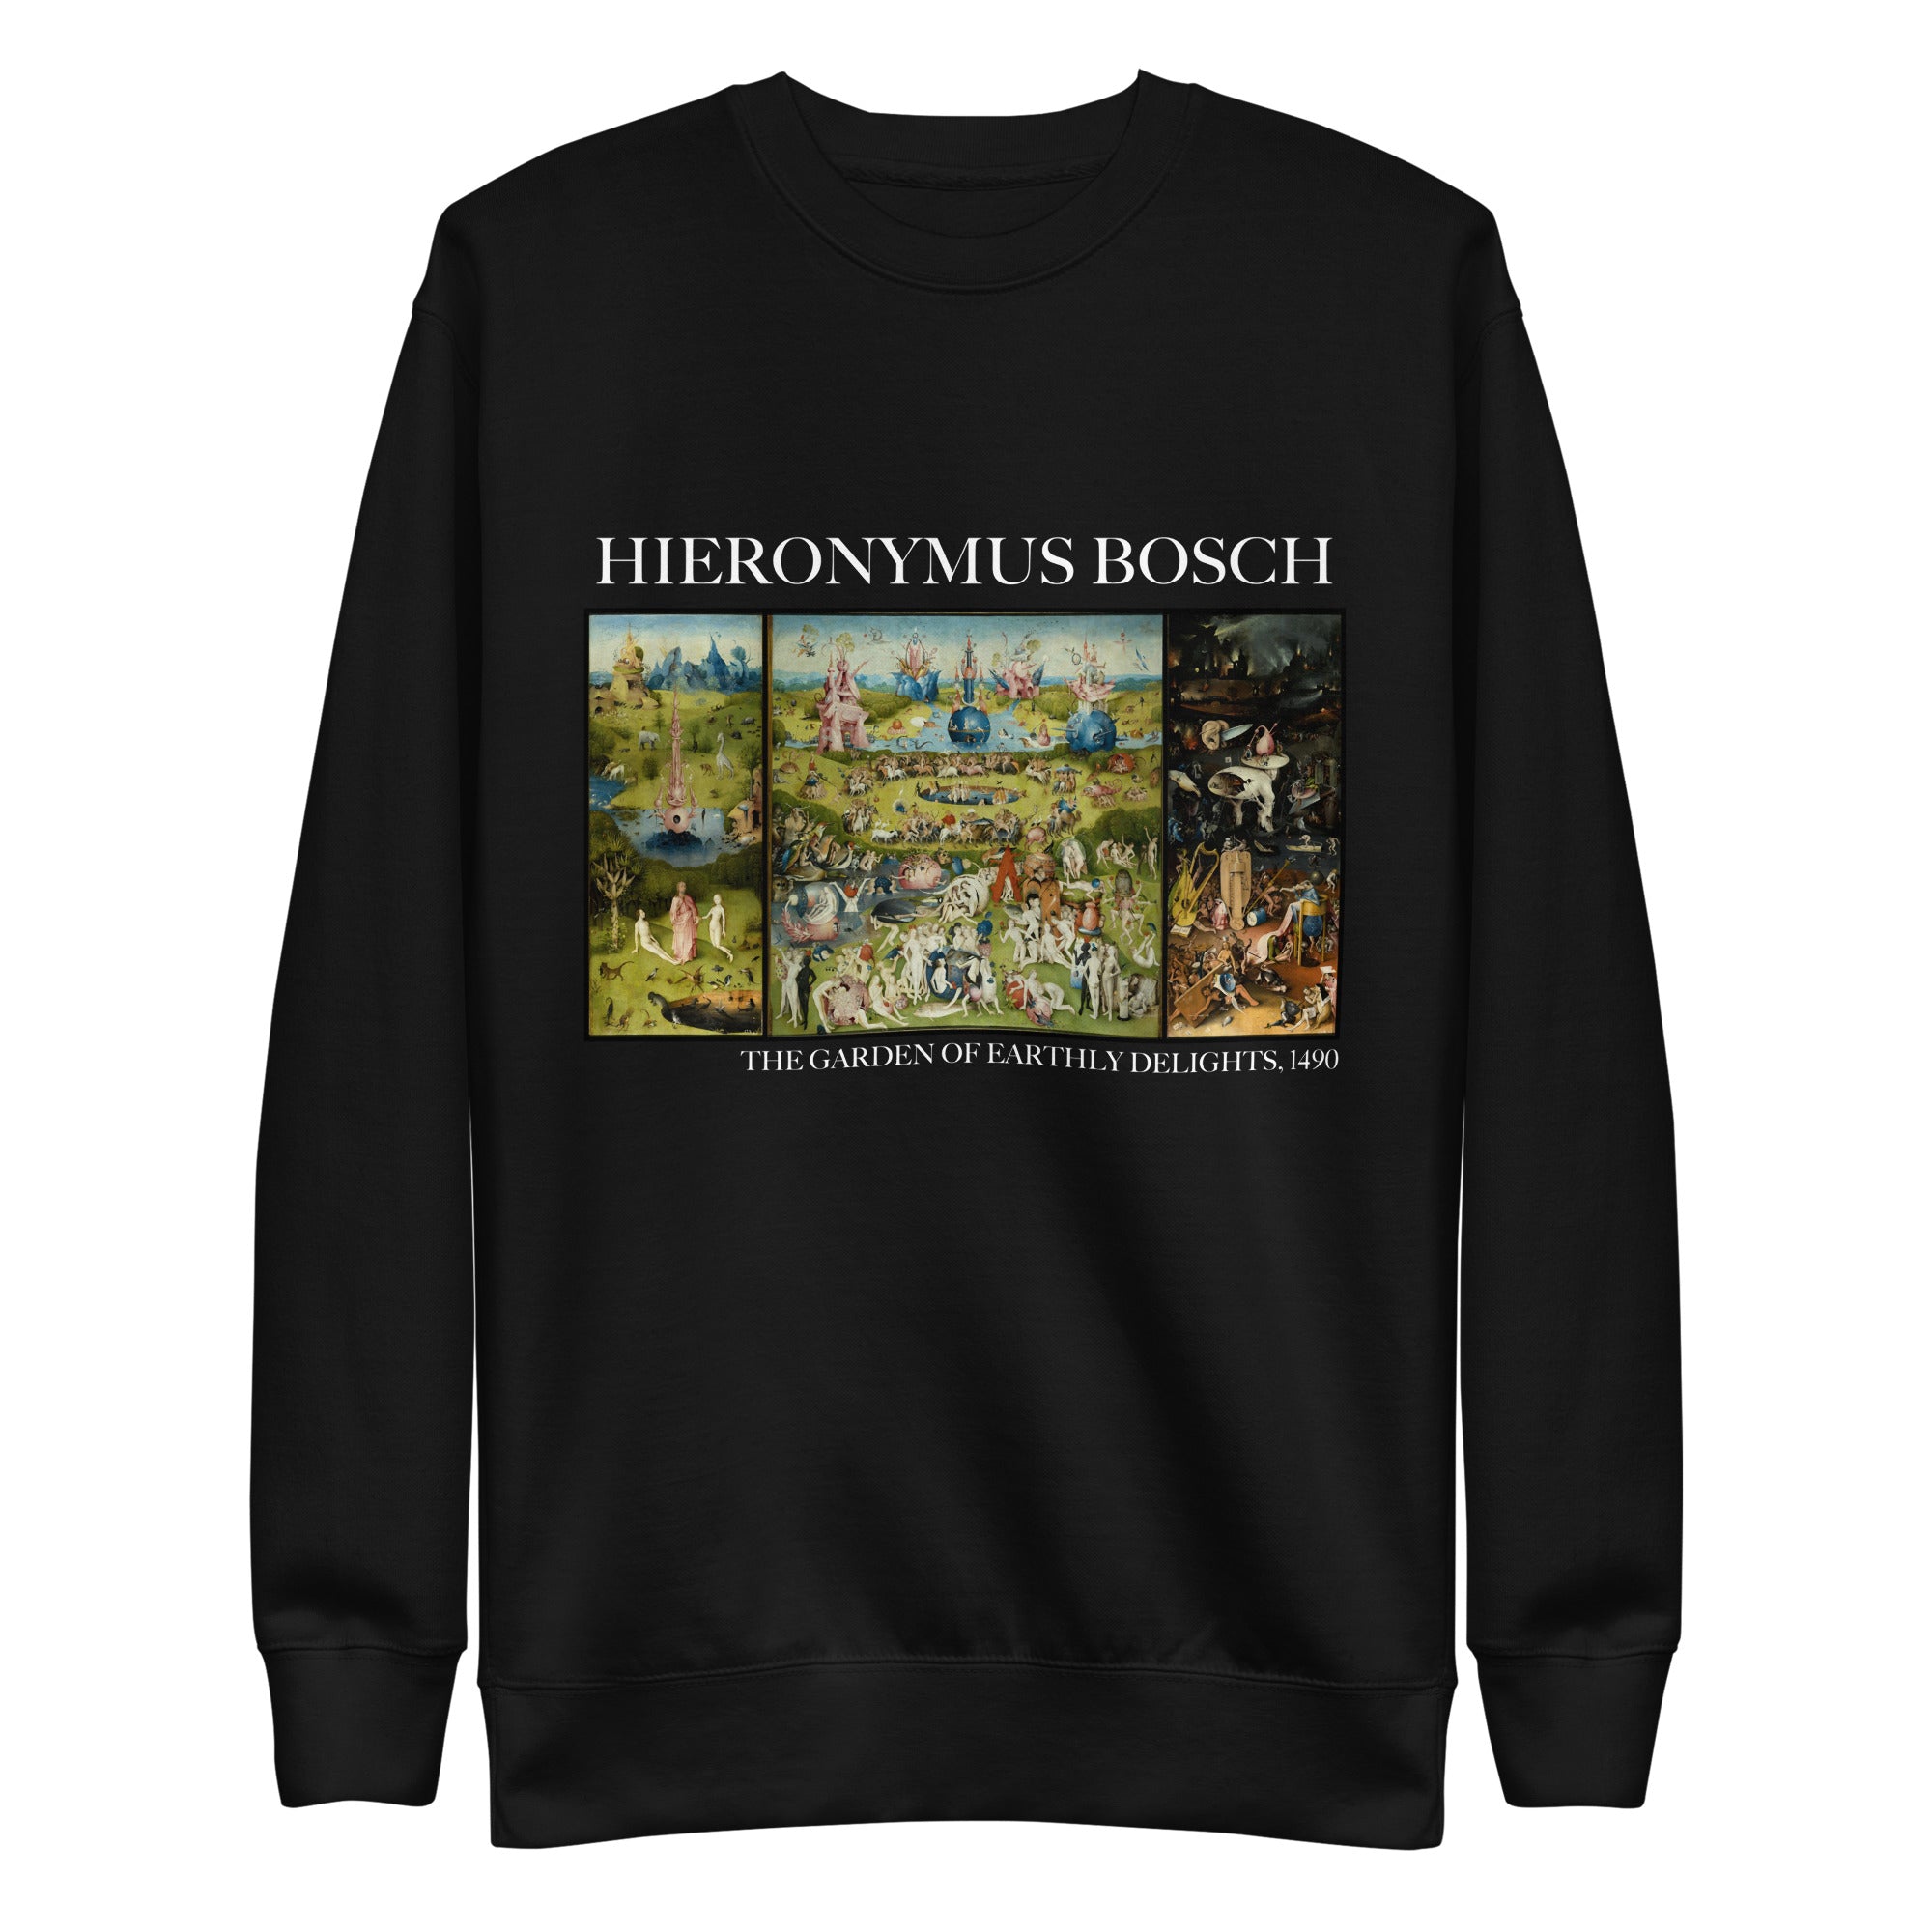 Hieronymus Bosch 'The Garden of Earthly Delights' Famous Painting Sweatshirt | Unisex Premium Sweatshirt